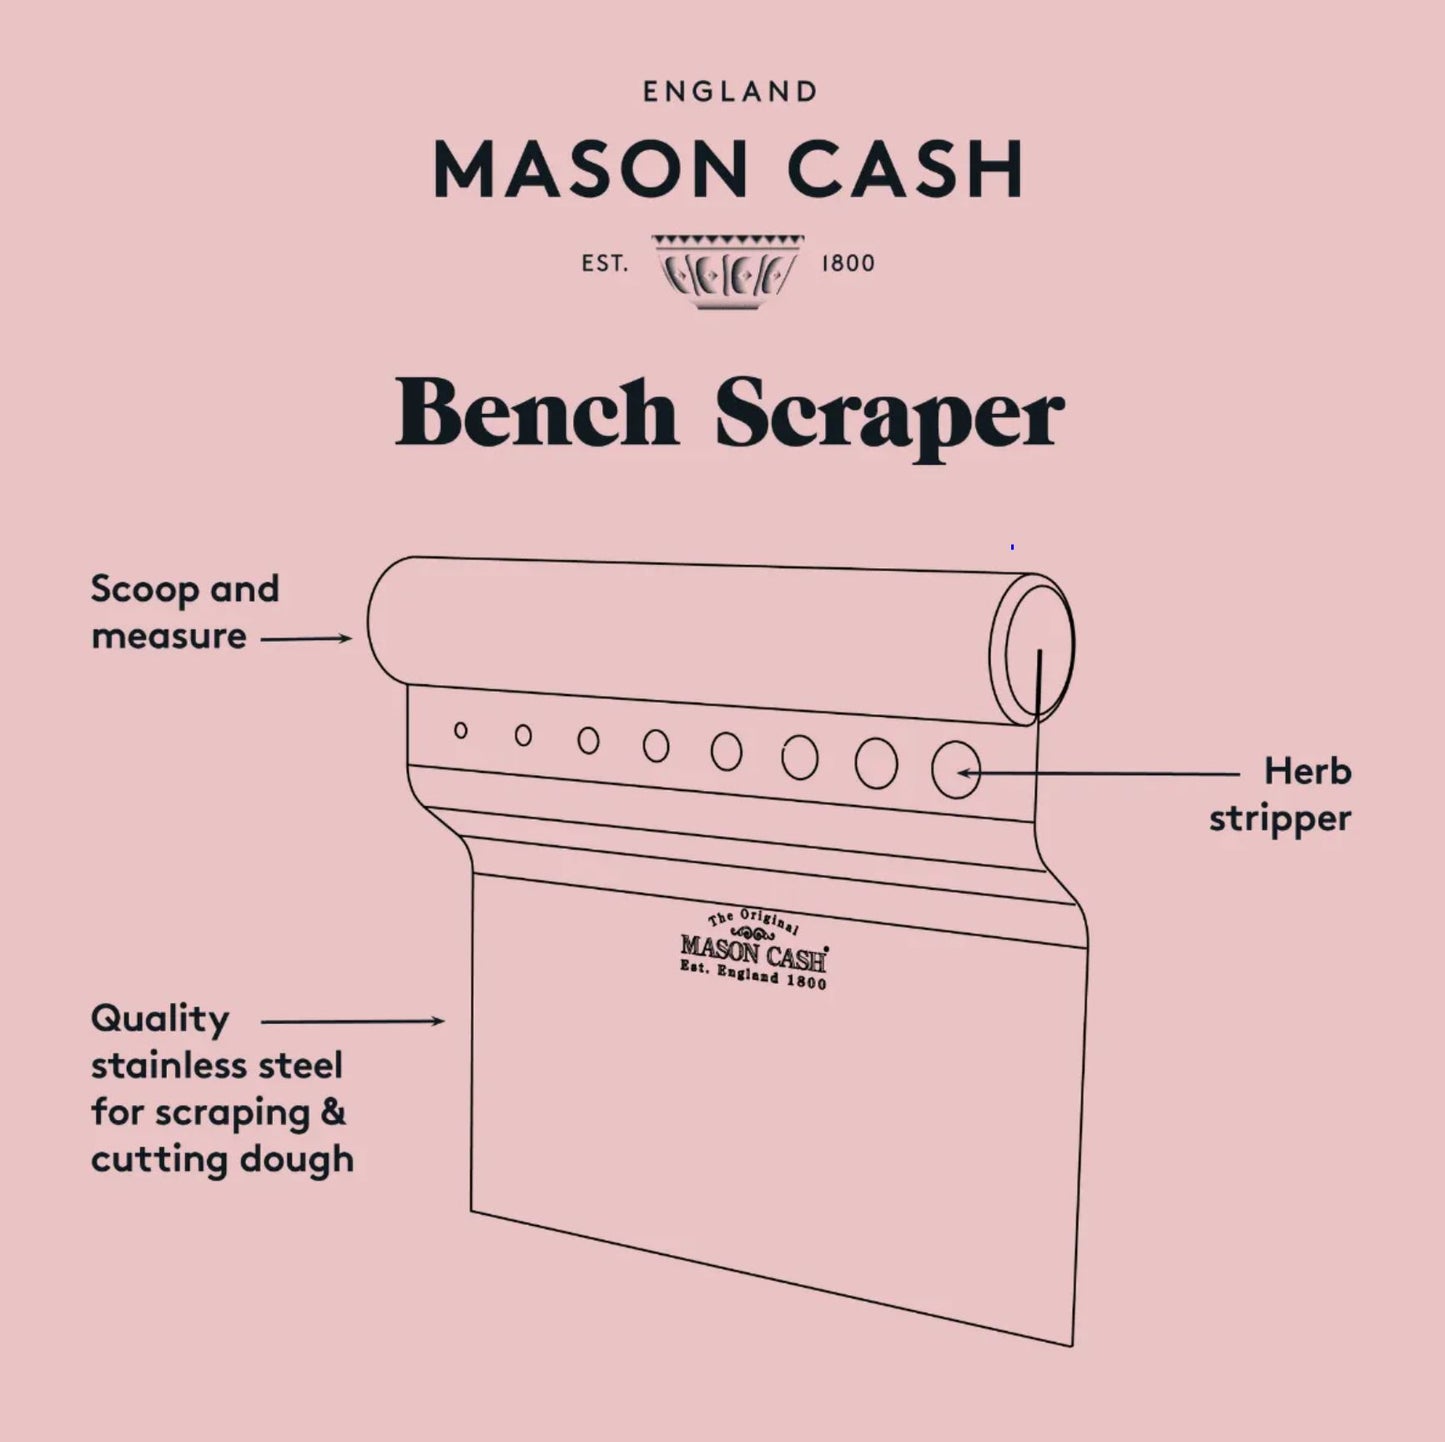 Mason Cash Innovative Kitchen Bench Scraper